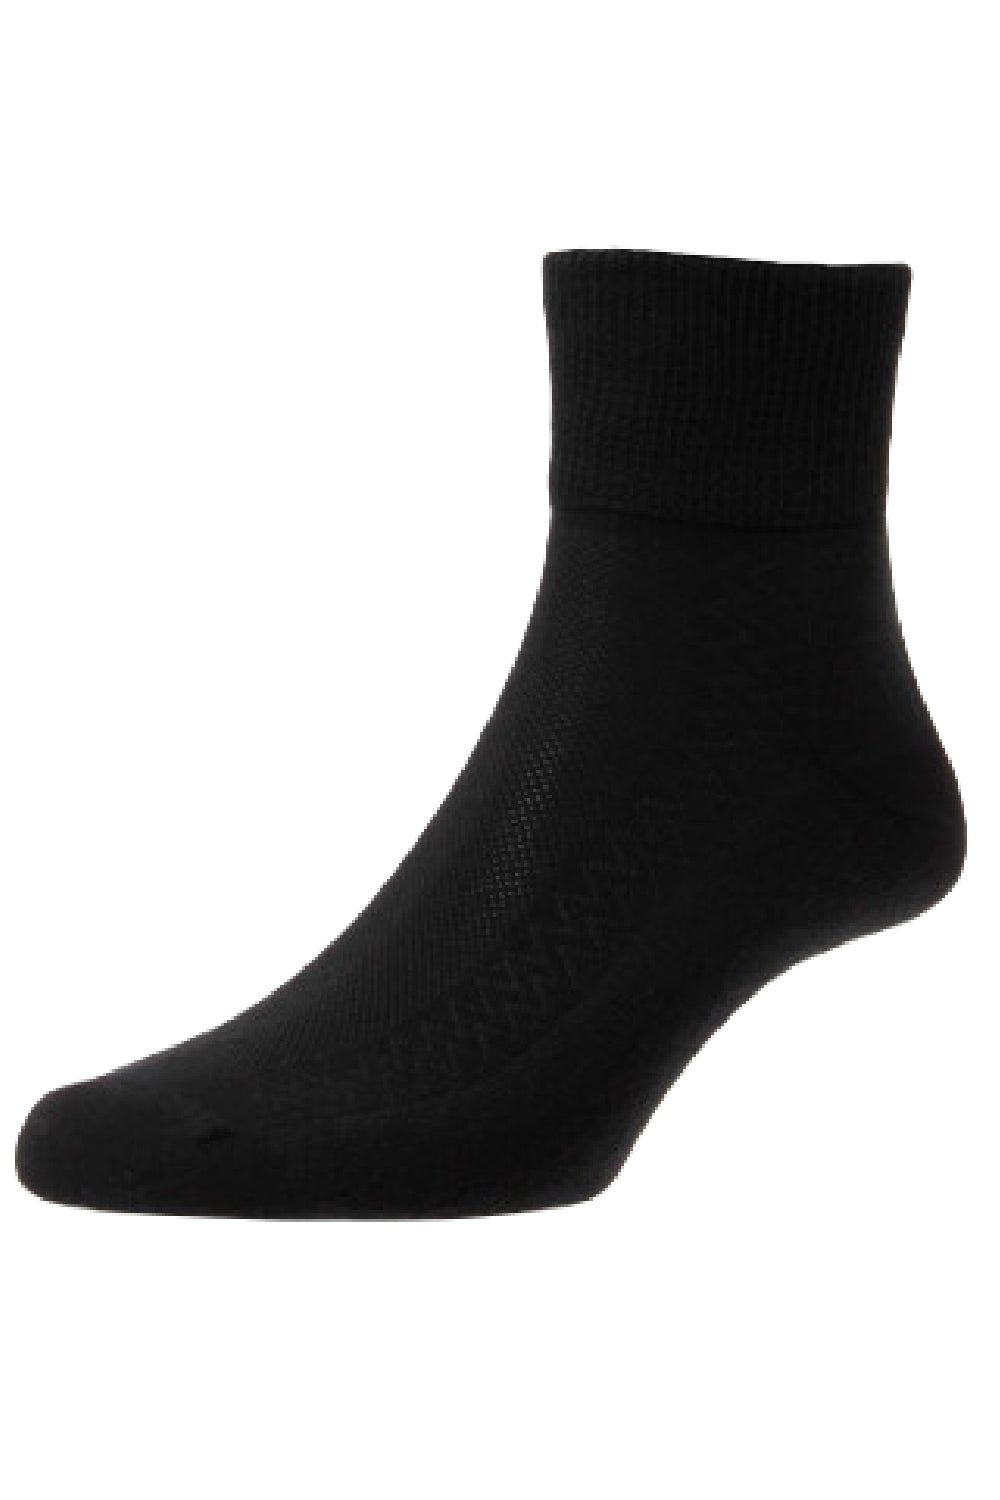 HJ Hall Diabetic Low Rise Cotton Socks in Black 